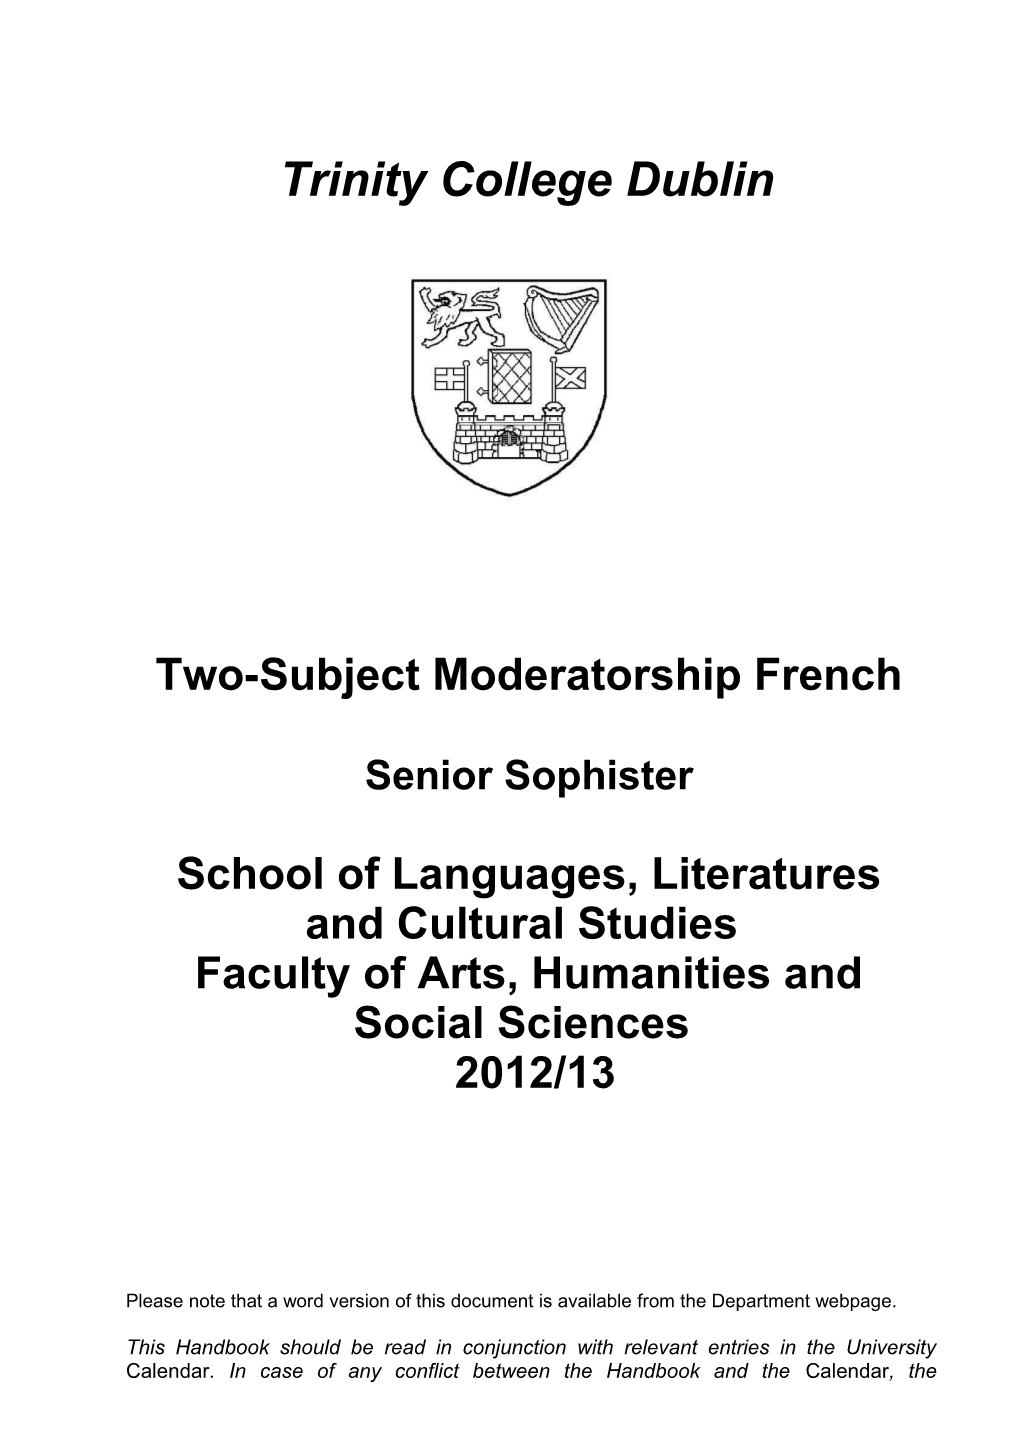 Two-Subject Moderatorship French